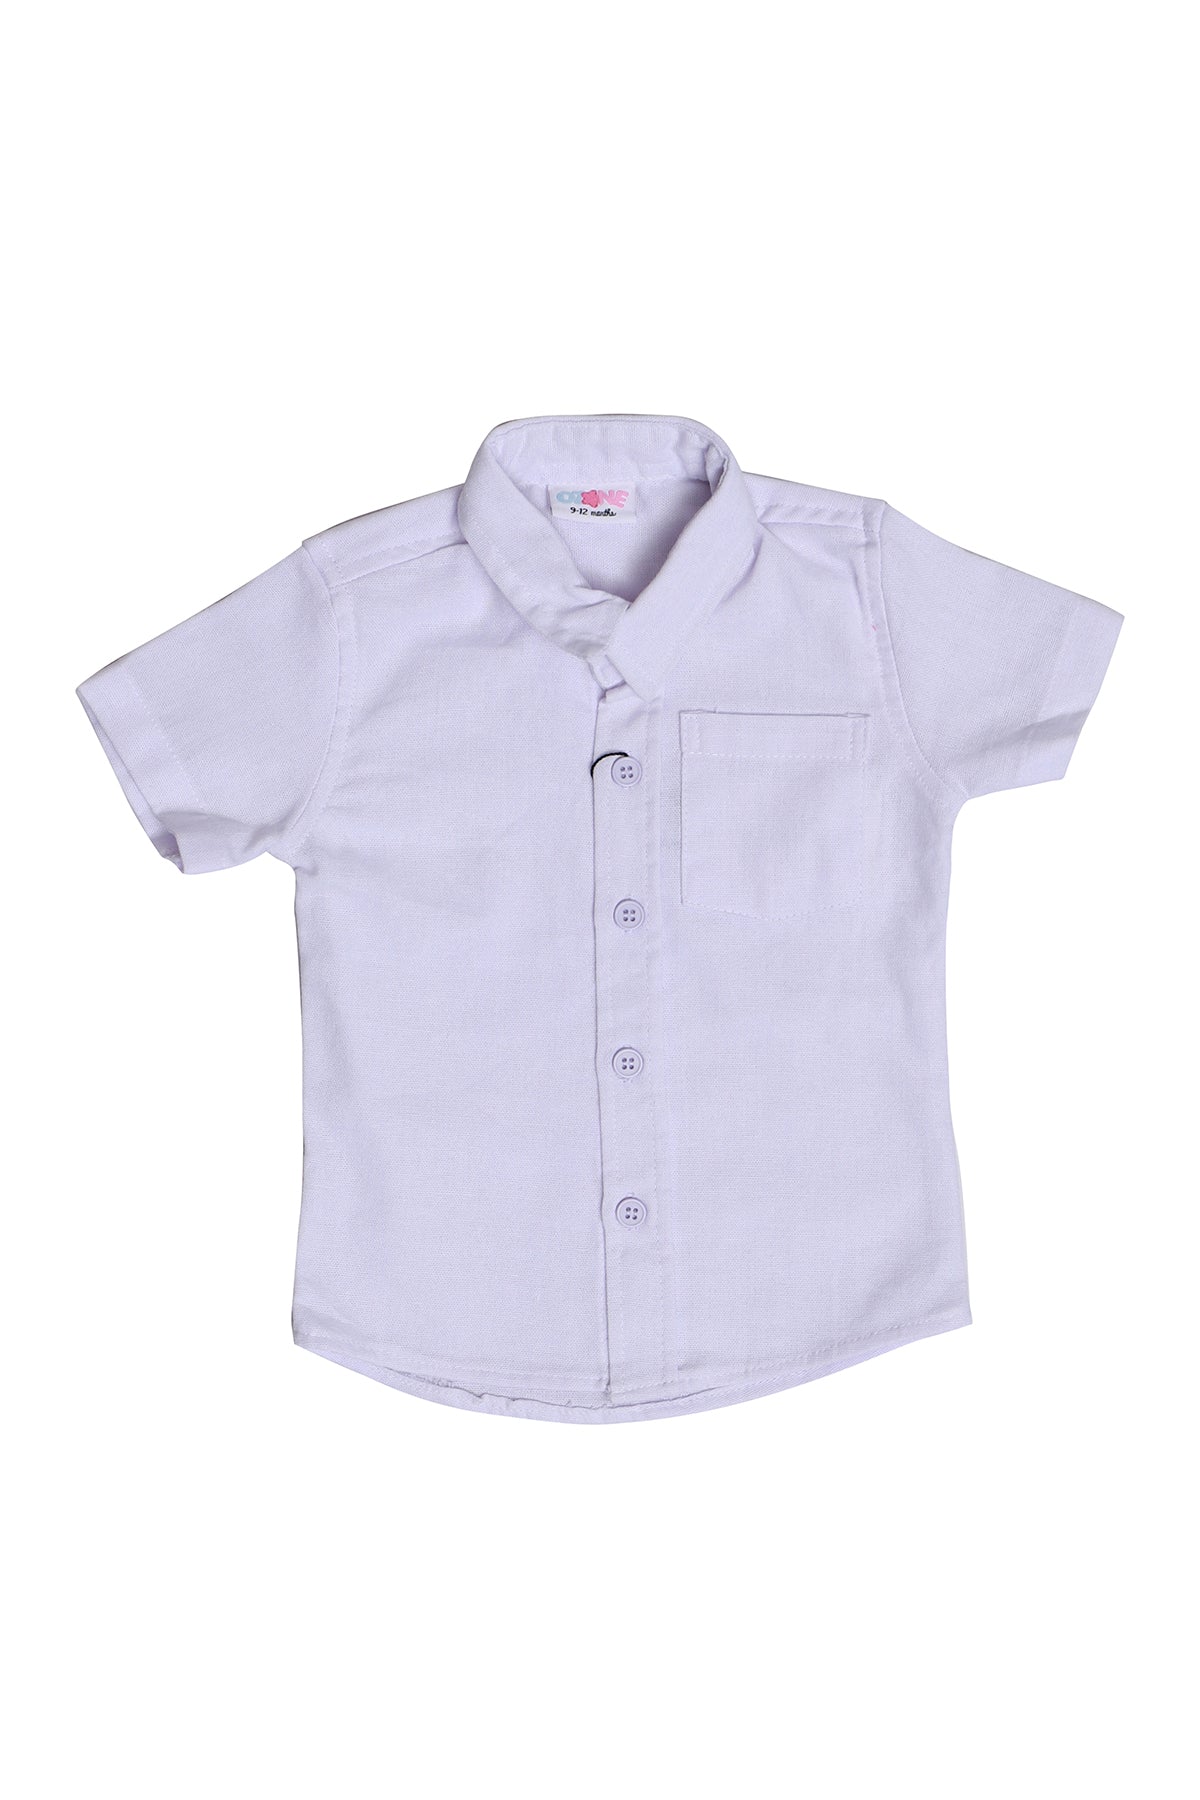 Ozone Baby Boys Short Sleeve Linen Casual Shirt